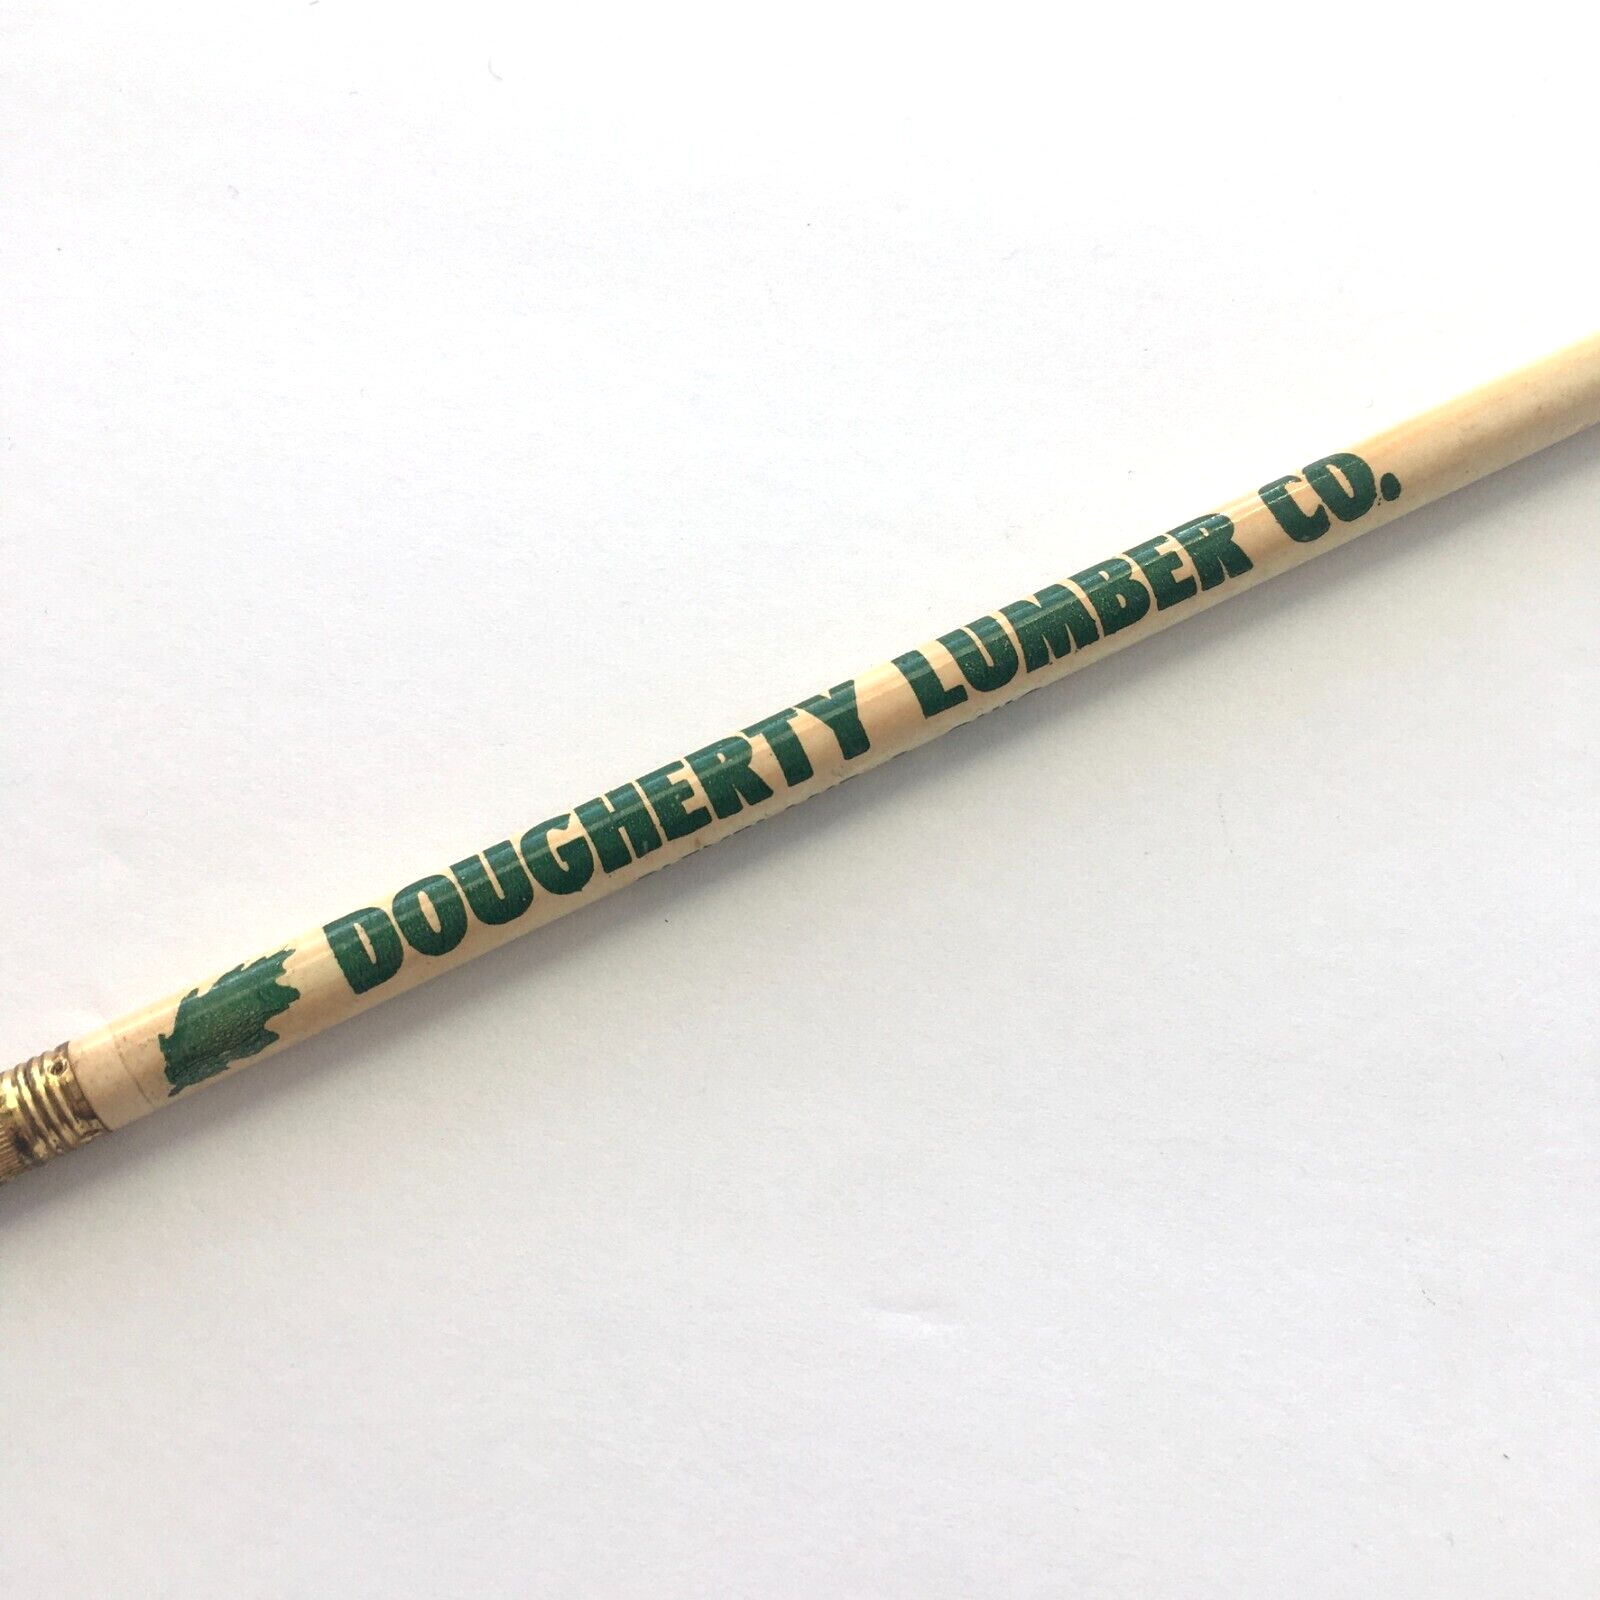 VTG Dougherty Lumber Co. Cleveland Ohio Mid-America Wood Pencil Unsharpened